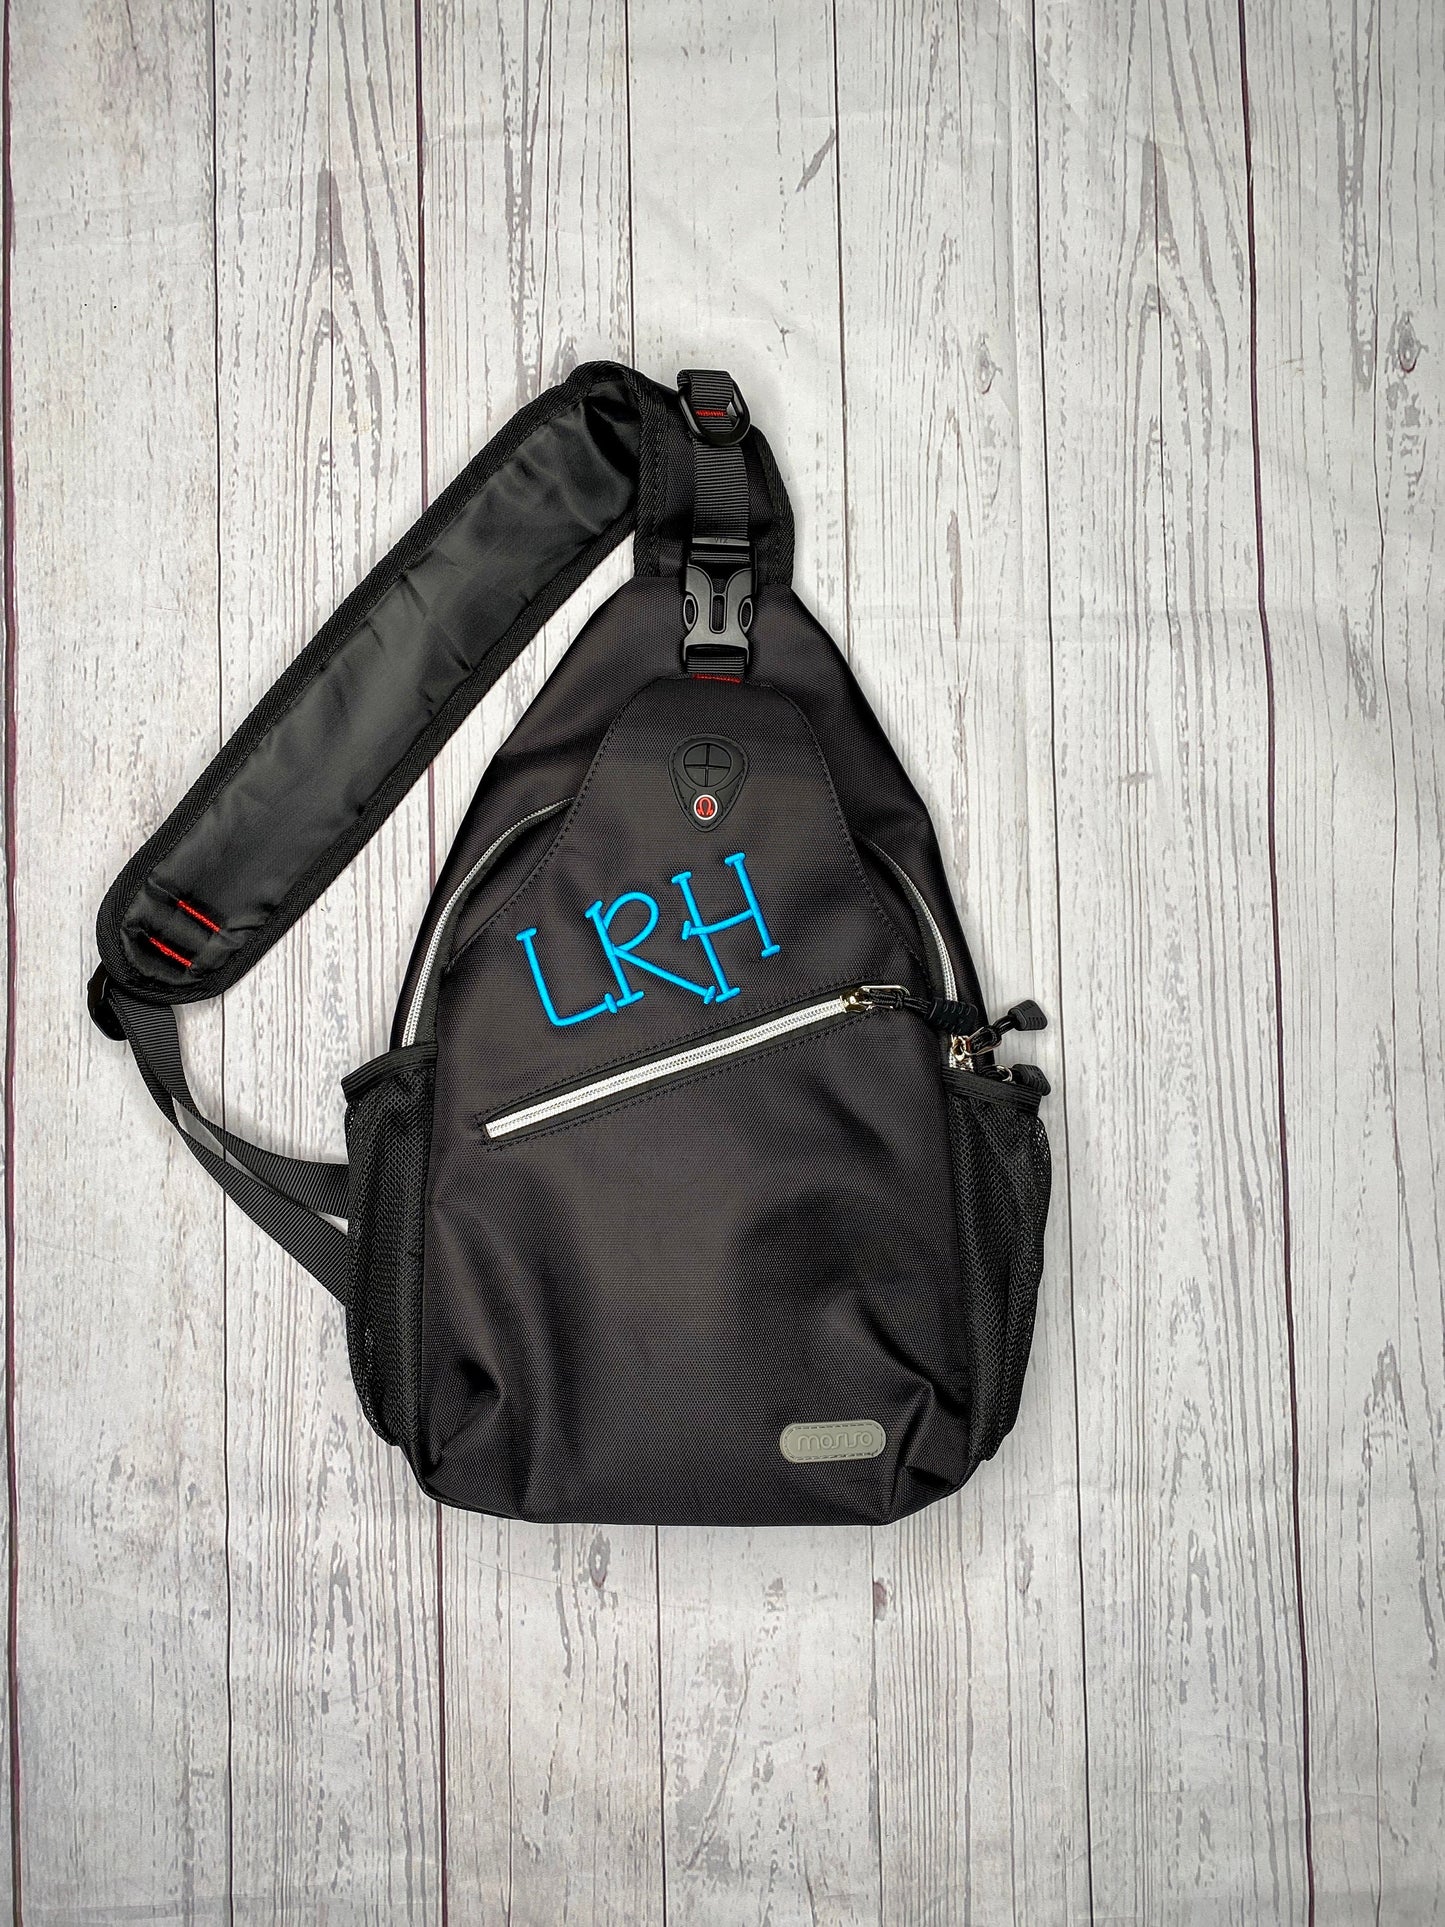 Personalized Monogrammed Name Cheerleader Team Shoulder Sling Bag, Athletic Gear Holder Backpack, Dance Team Sports Sling Bag with zip